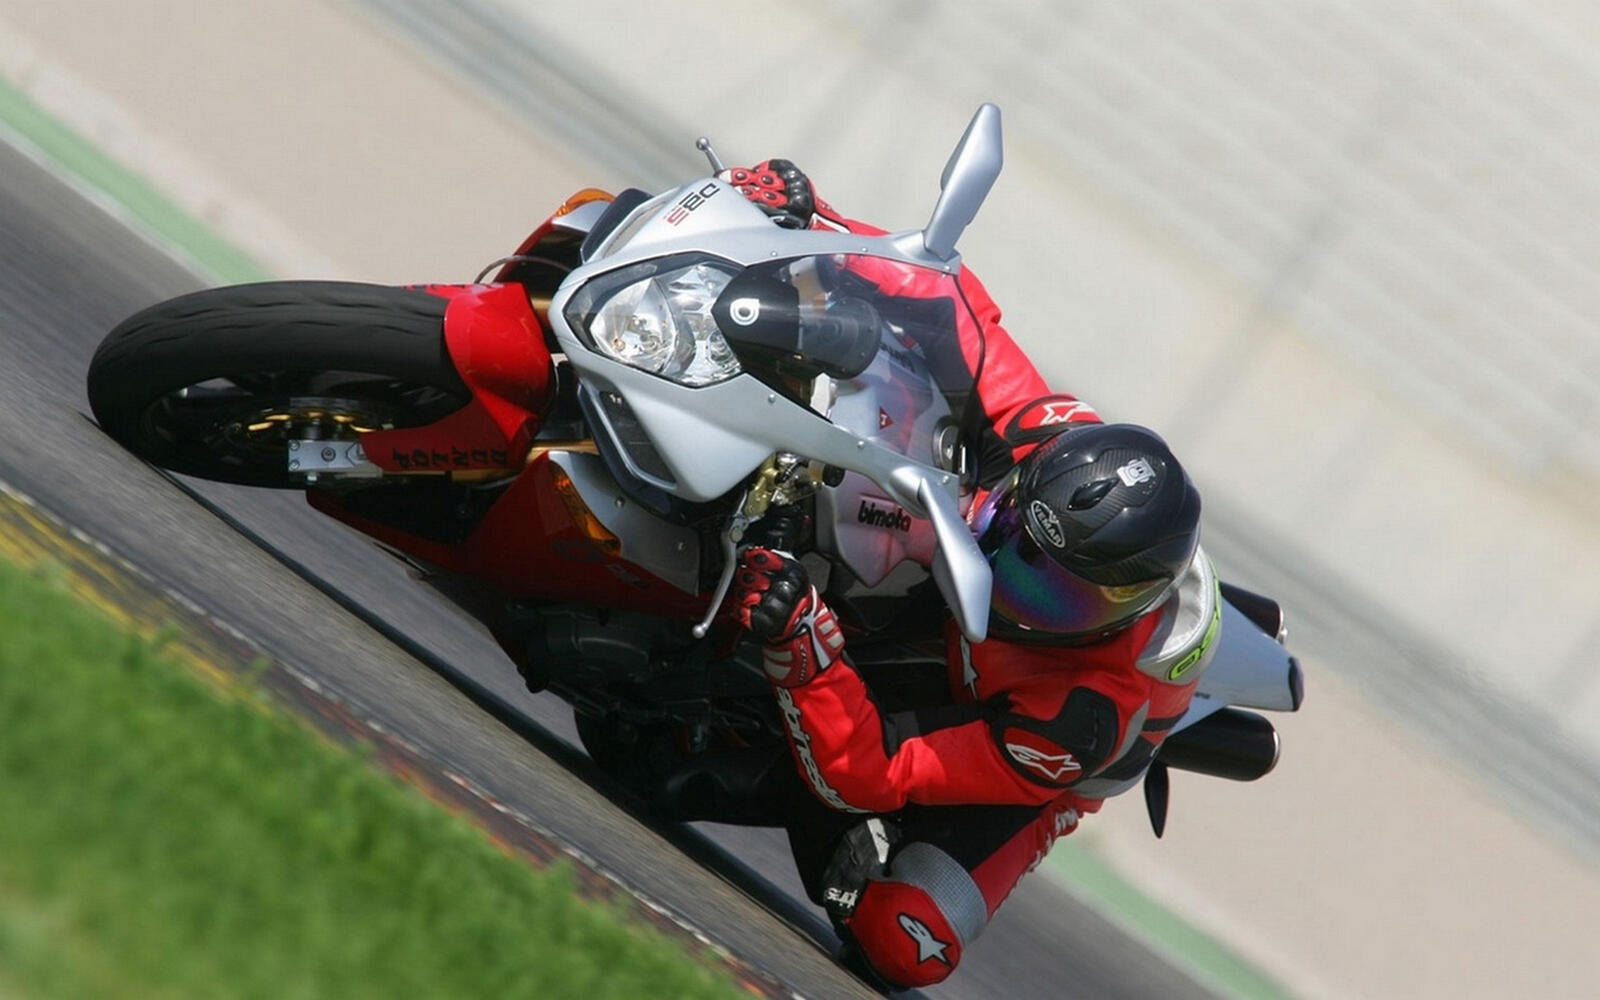 Wallpapers motorcycle racing sportbike racer on the desktop